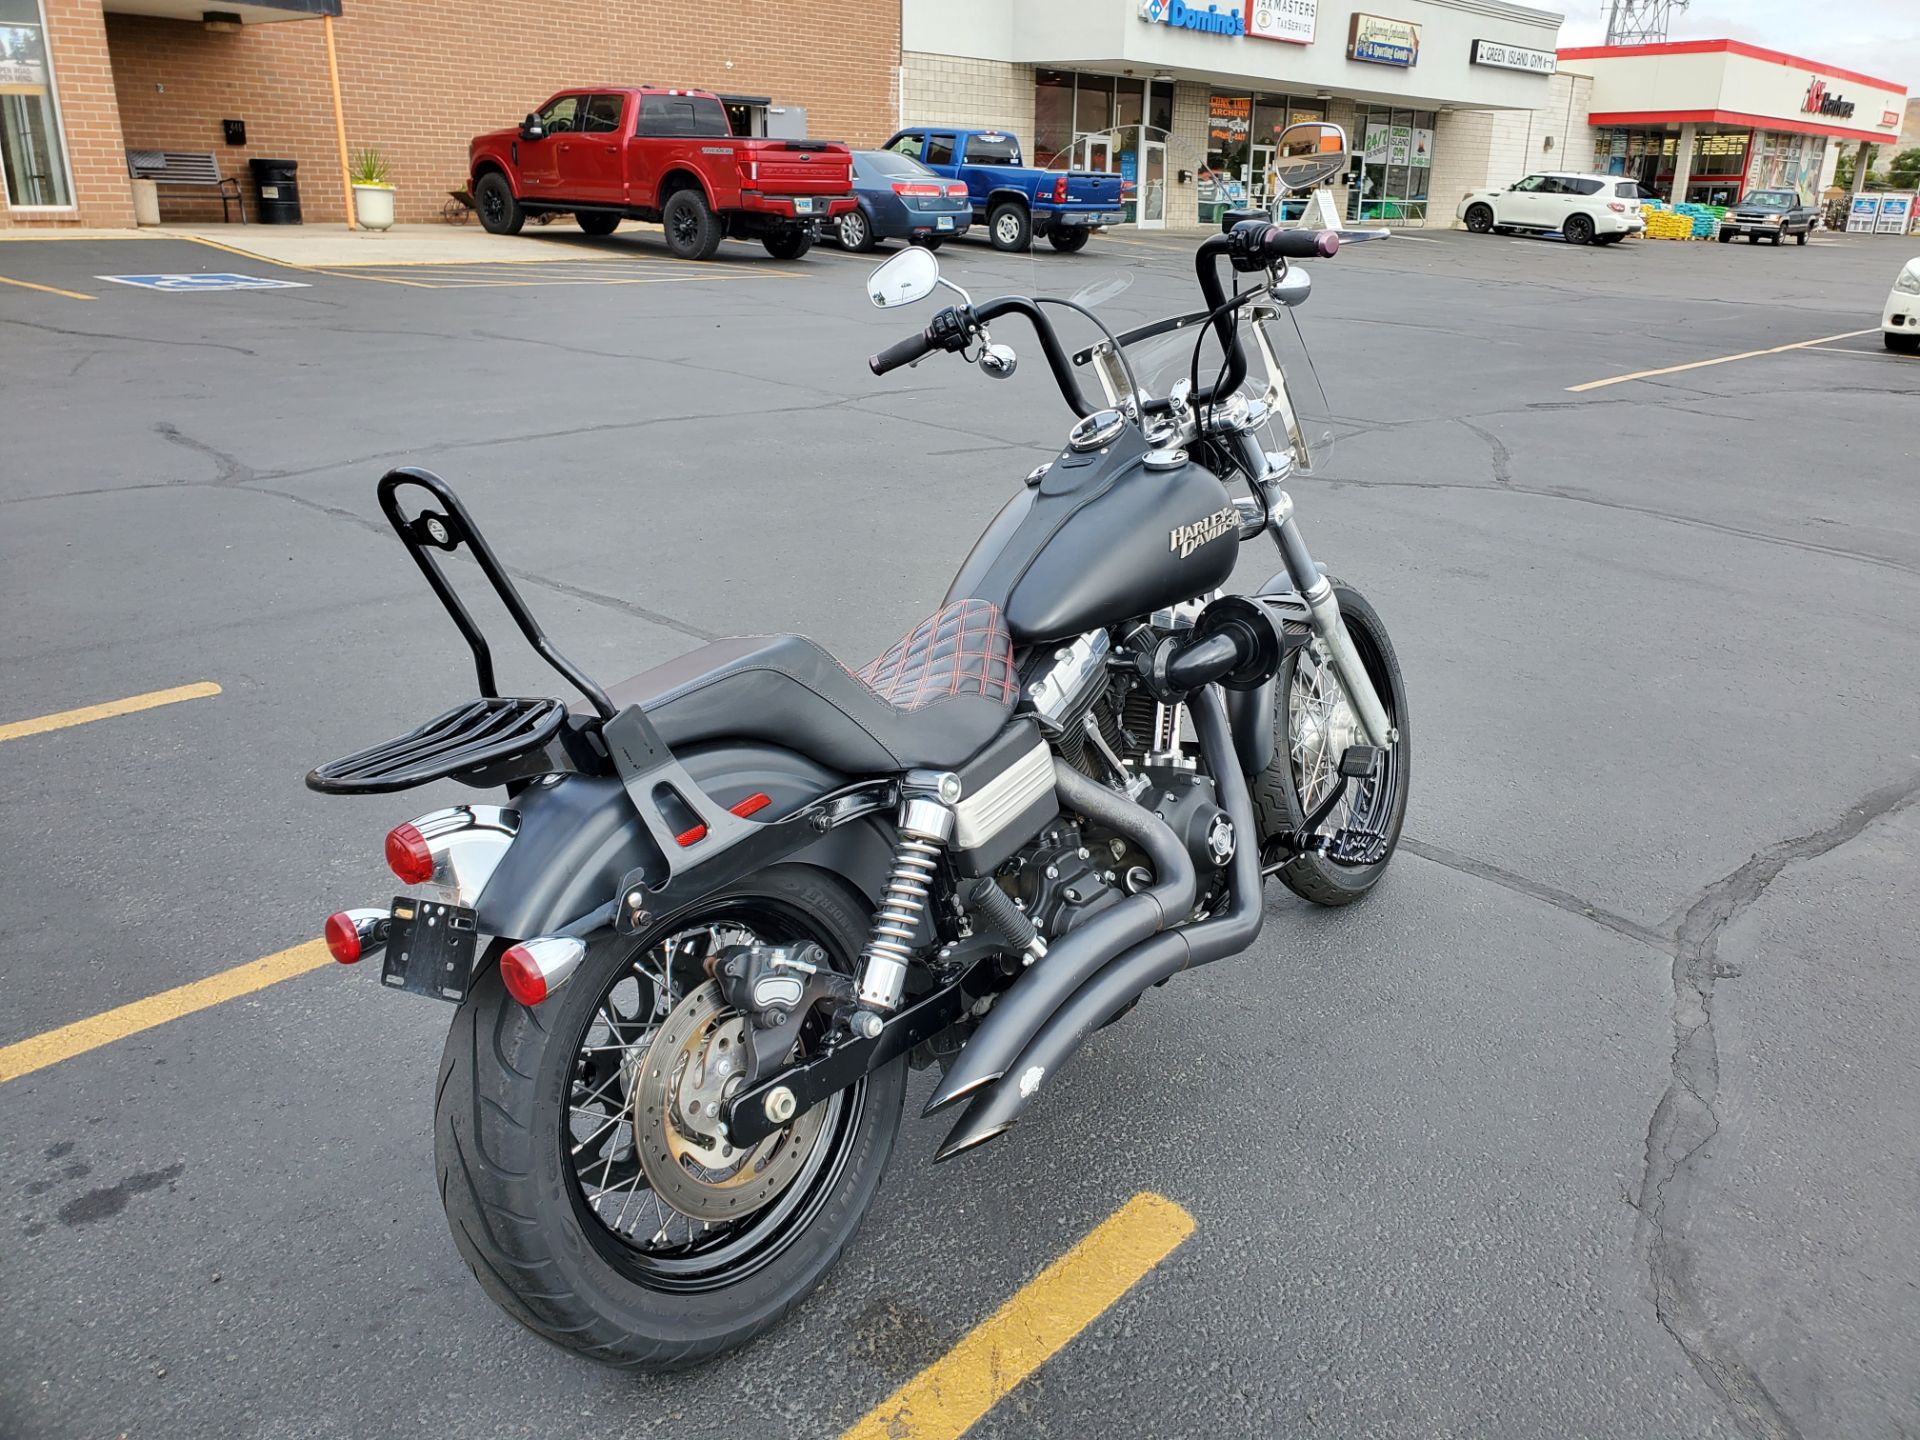 2012 Harley-Davidson Dyna® Street Bob® in Green River, Wyoming - Photo 2